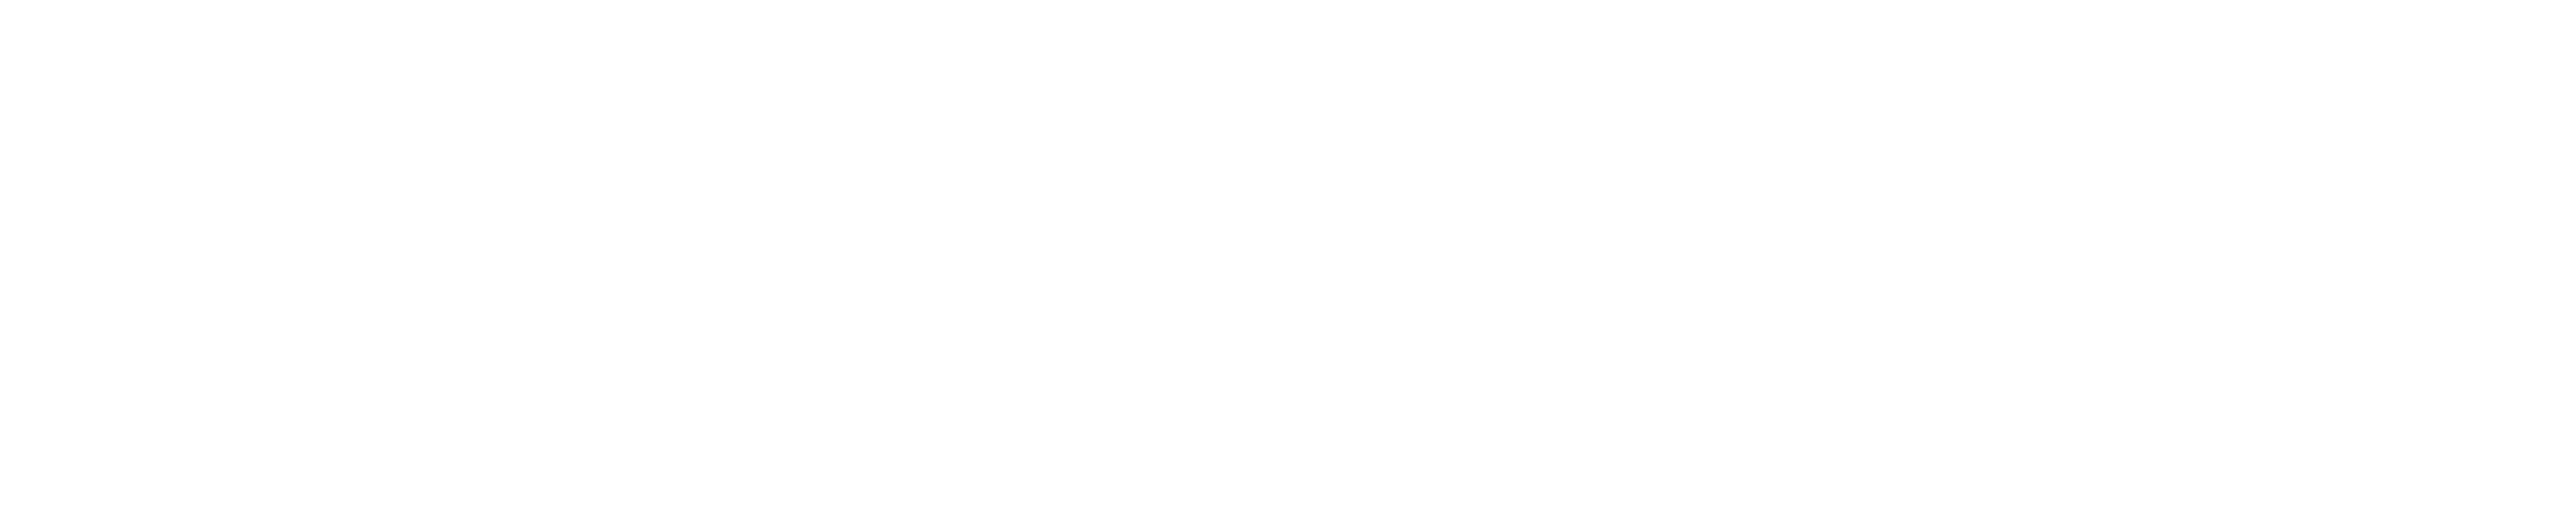 ShopCapTech footer logo